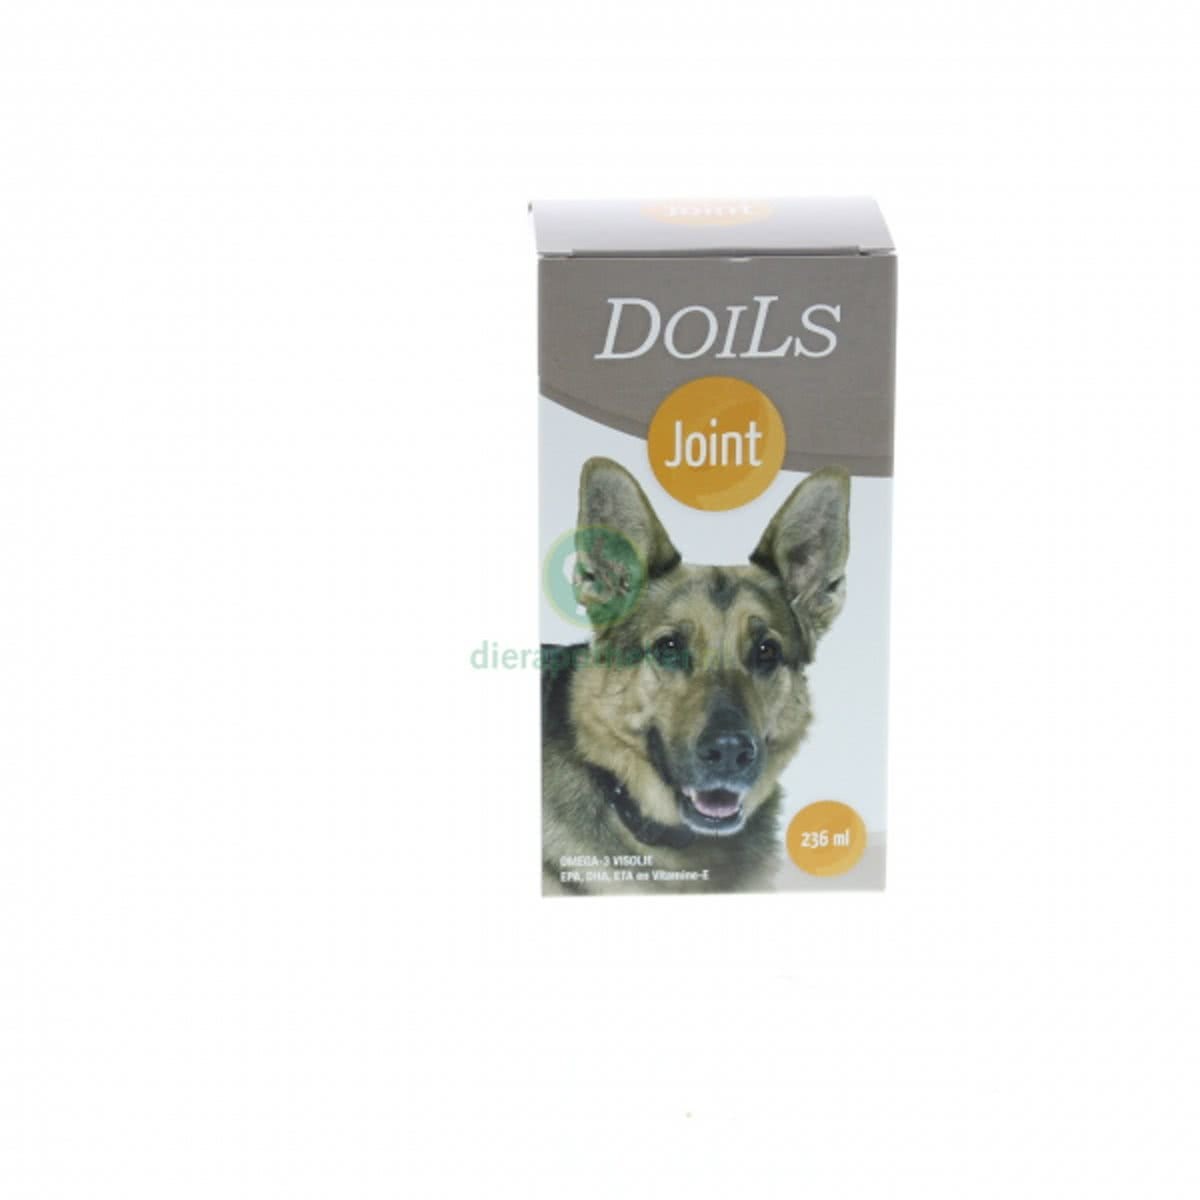 Doils Joint 236 ml